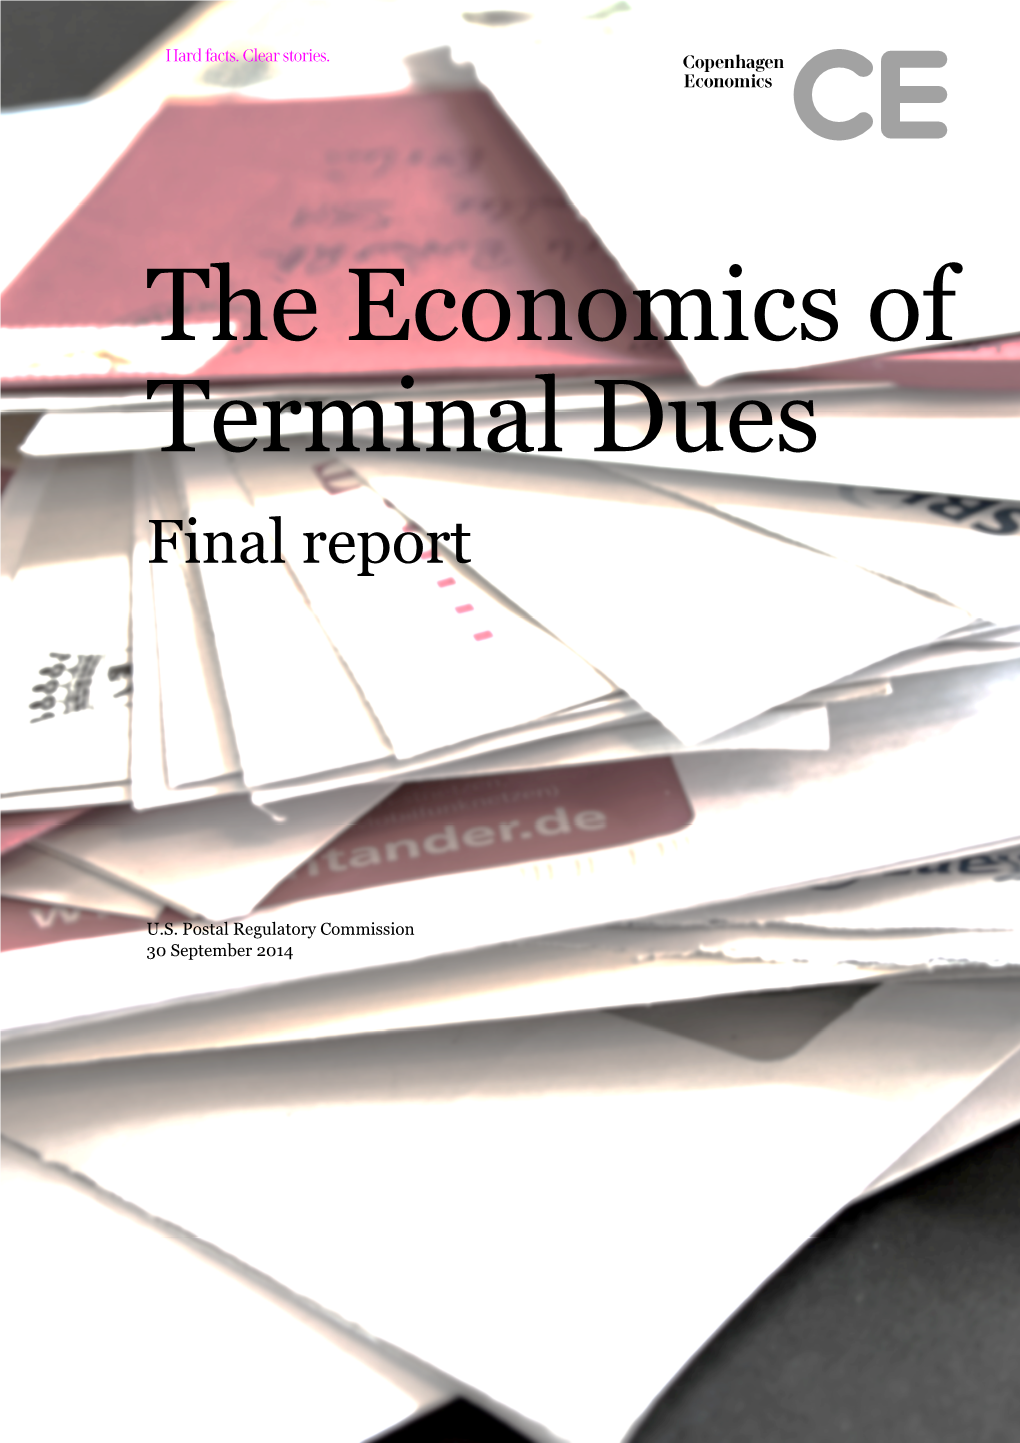 The Economics of Terminal Dues Final Report